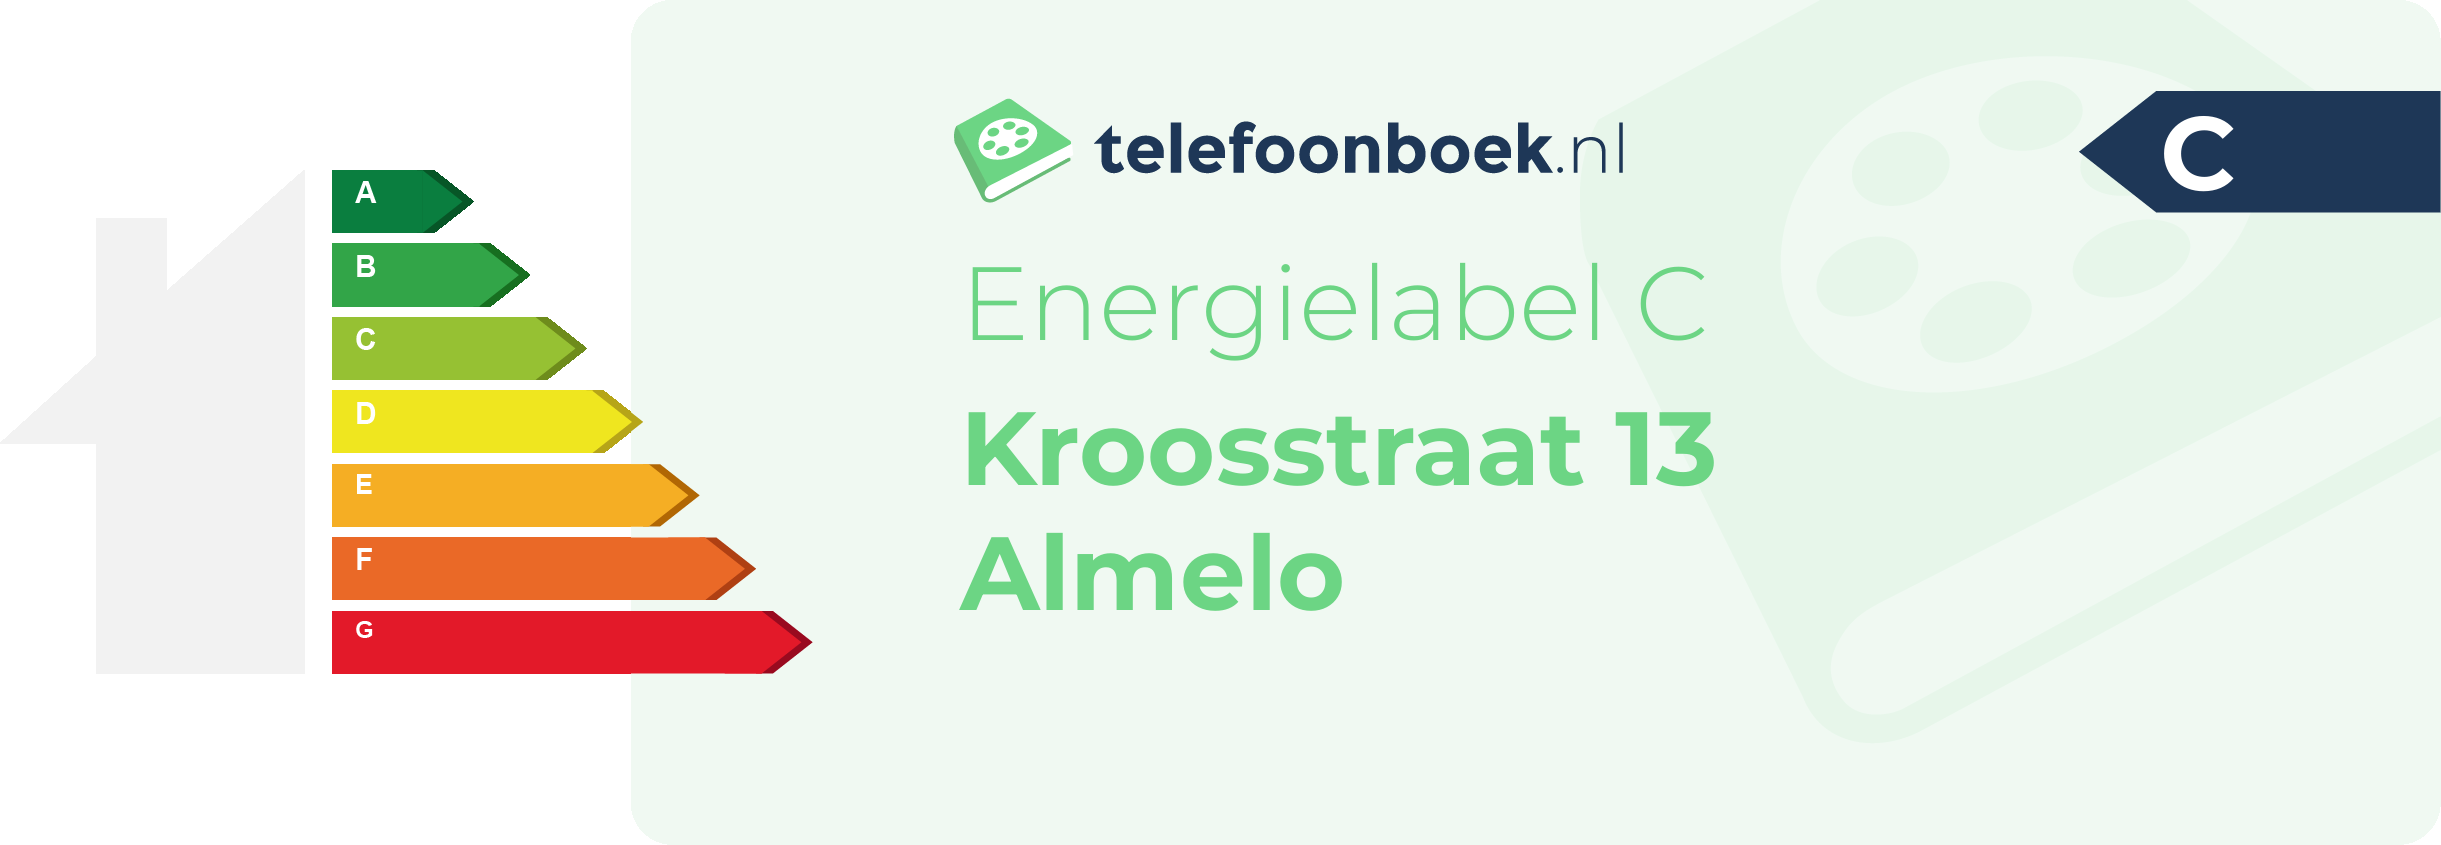 Energielabel Kroosstraat 13 Almelo